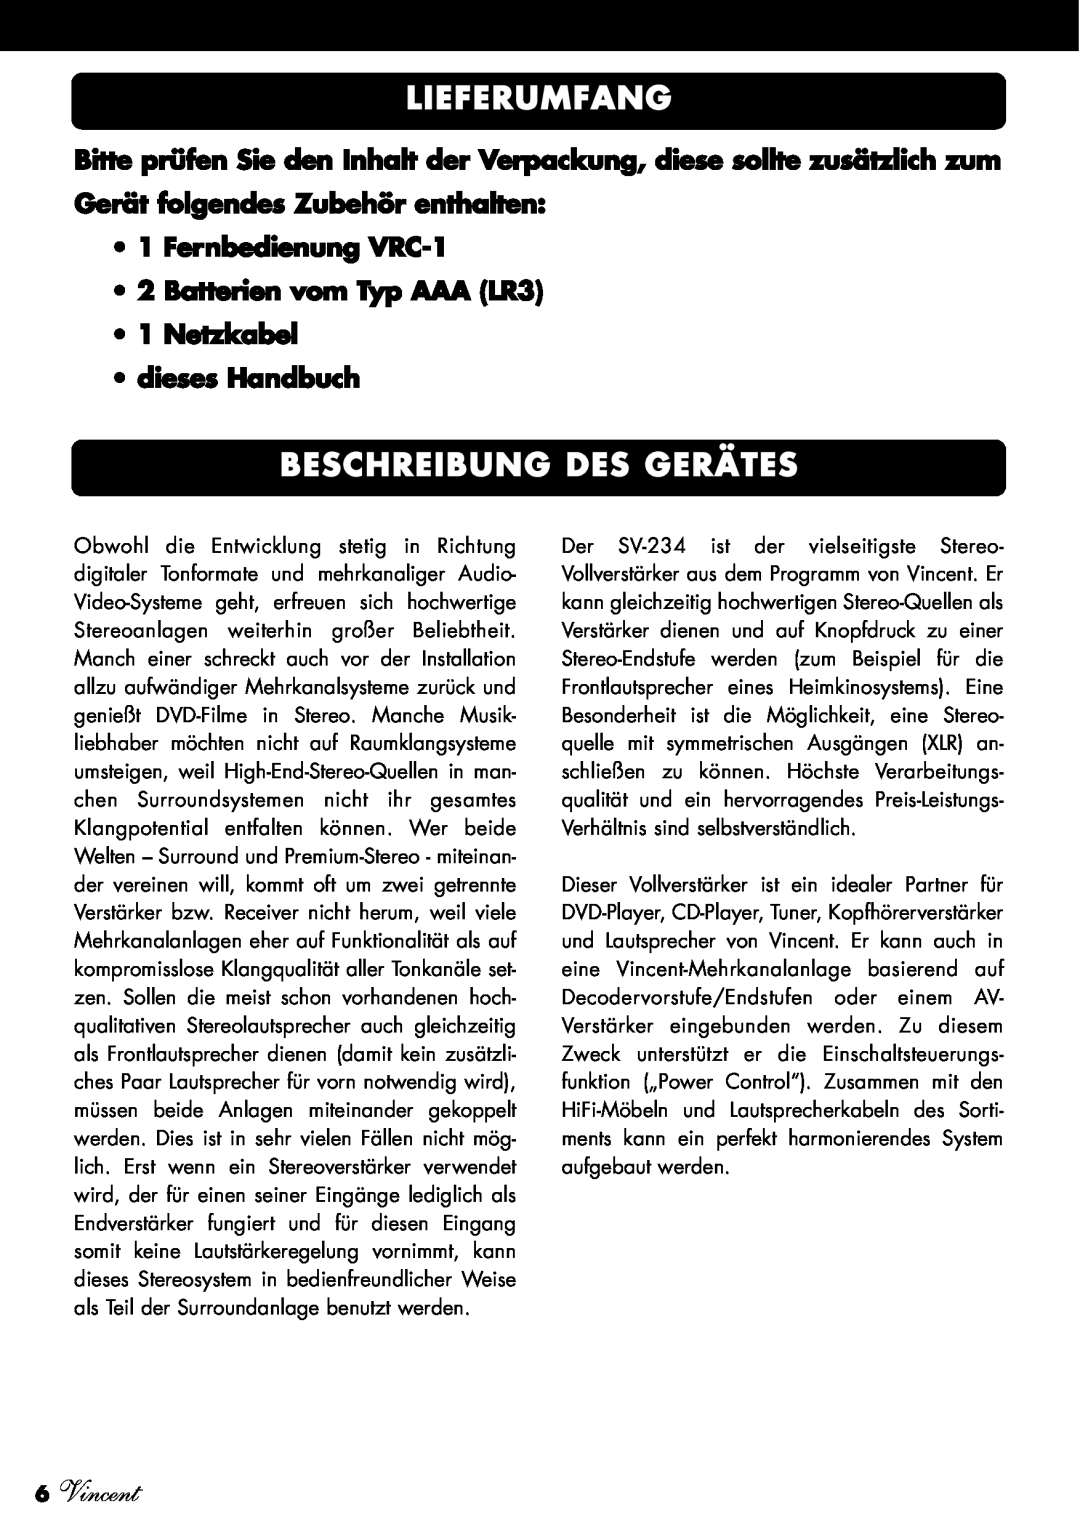 Vincent Audio SV-234 Lieferumfang, Beschreibung Des Gerätes, 6Vincent, Fernbedienung VRC-1, dieses Handbuch 